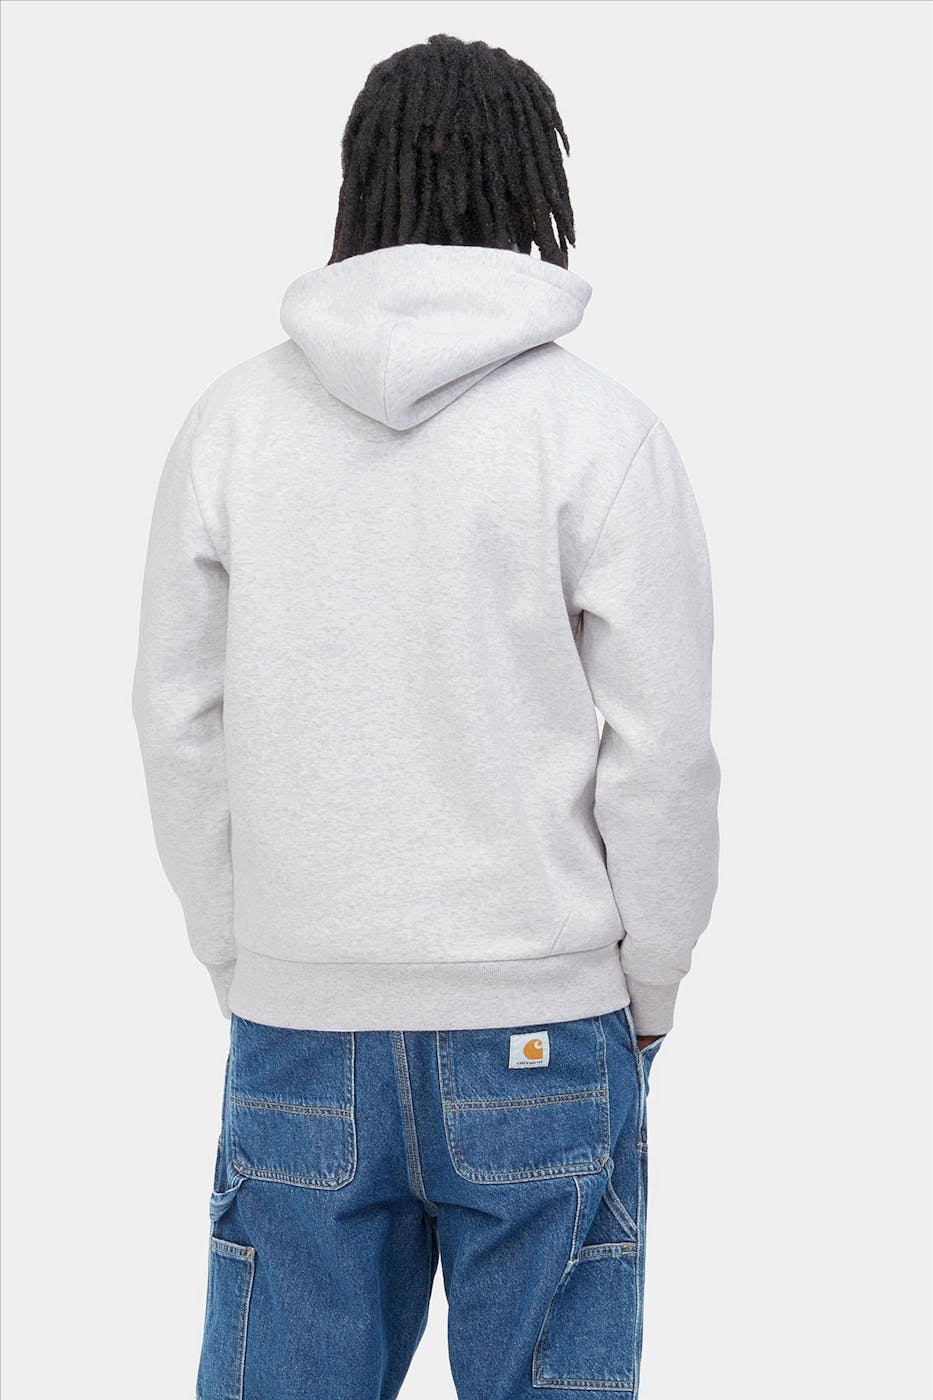 Carhartt WIP - Lichtgrijze Dream Factory hoodie